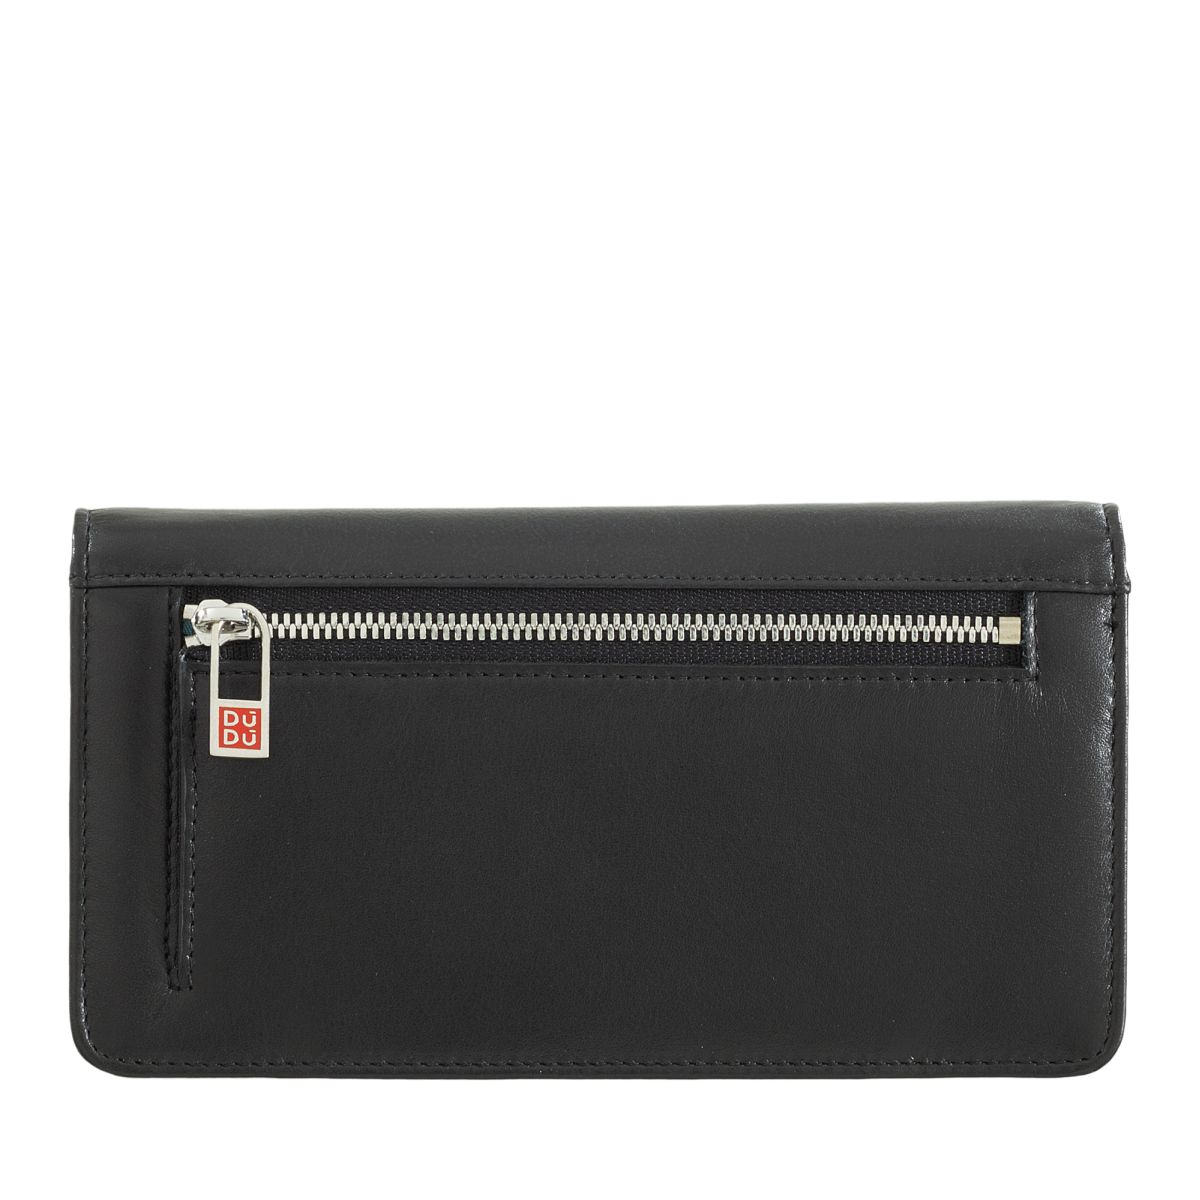 DuDu Ladies leather multi color wallet - Black